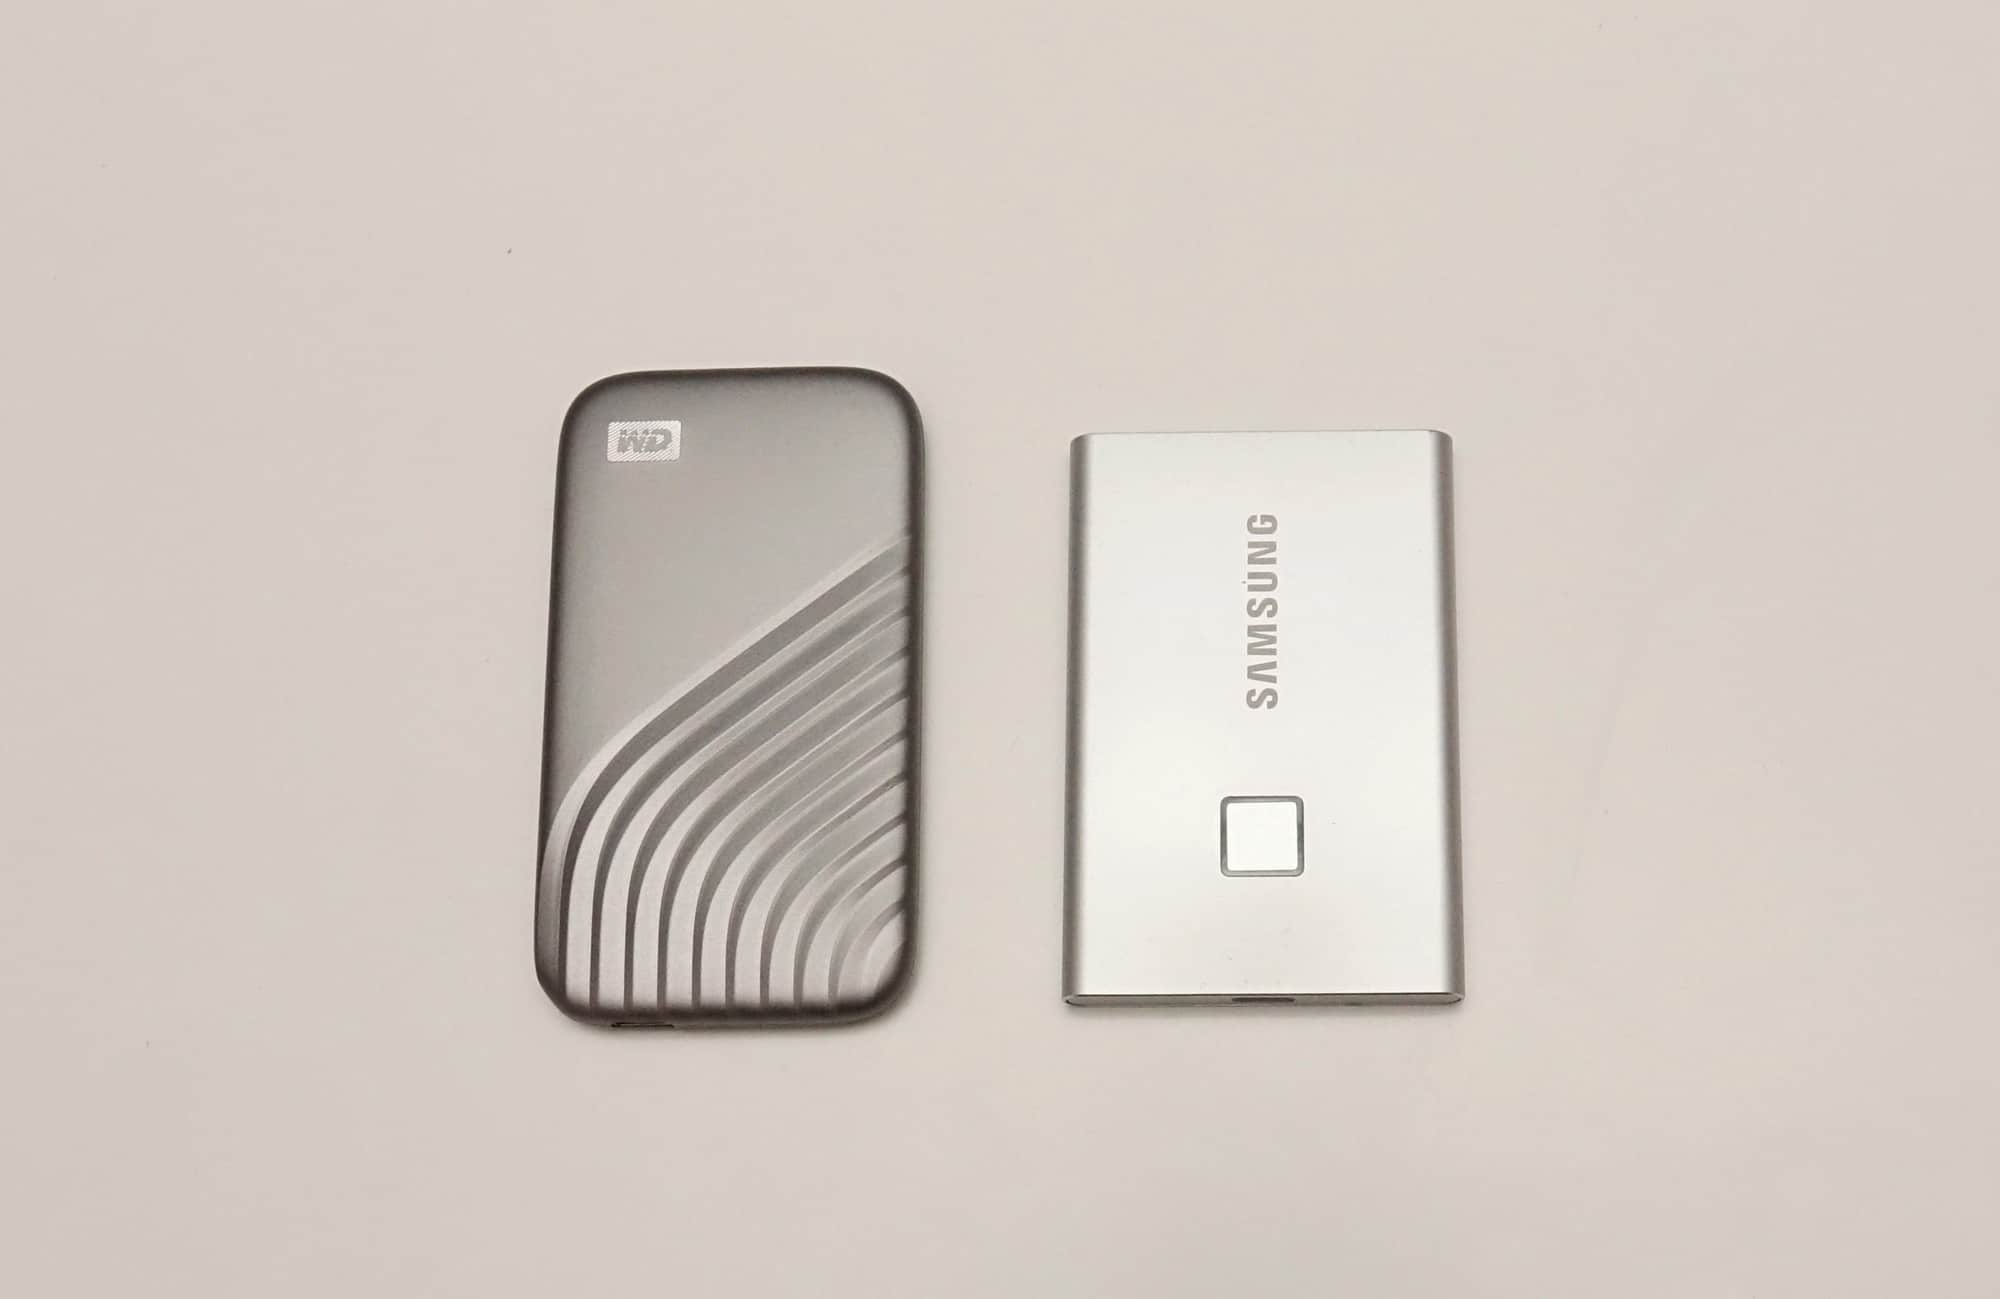 WD My Passport SSD vs Samsung T7 Touch SSD